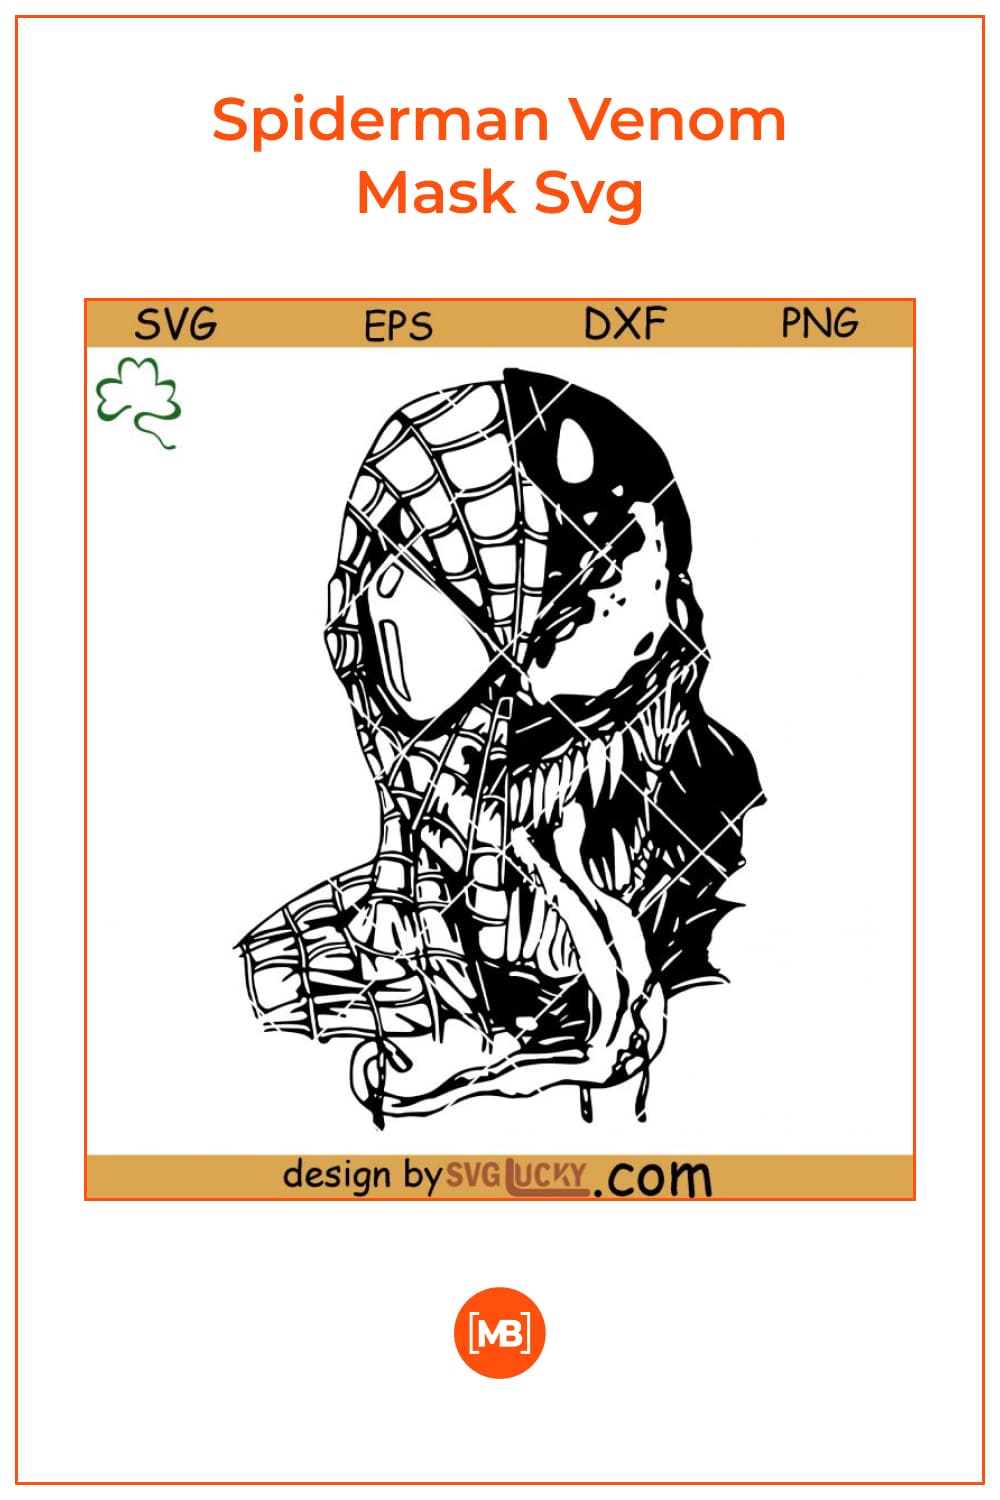 Spider-Man Venom Mask Svg.